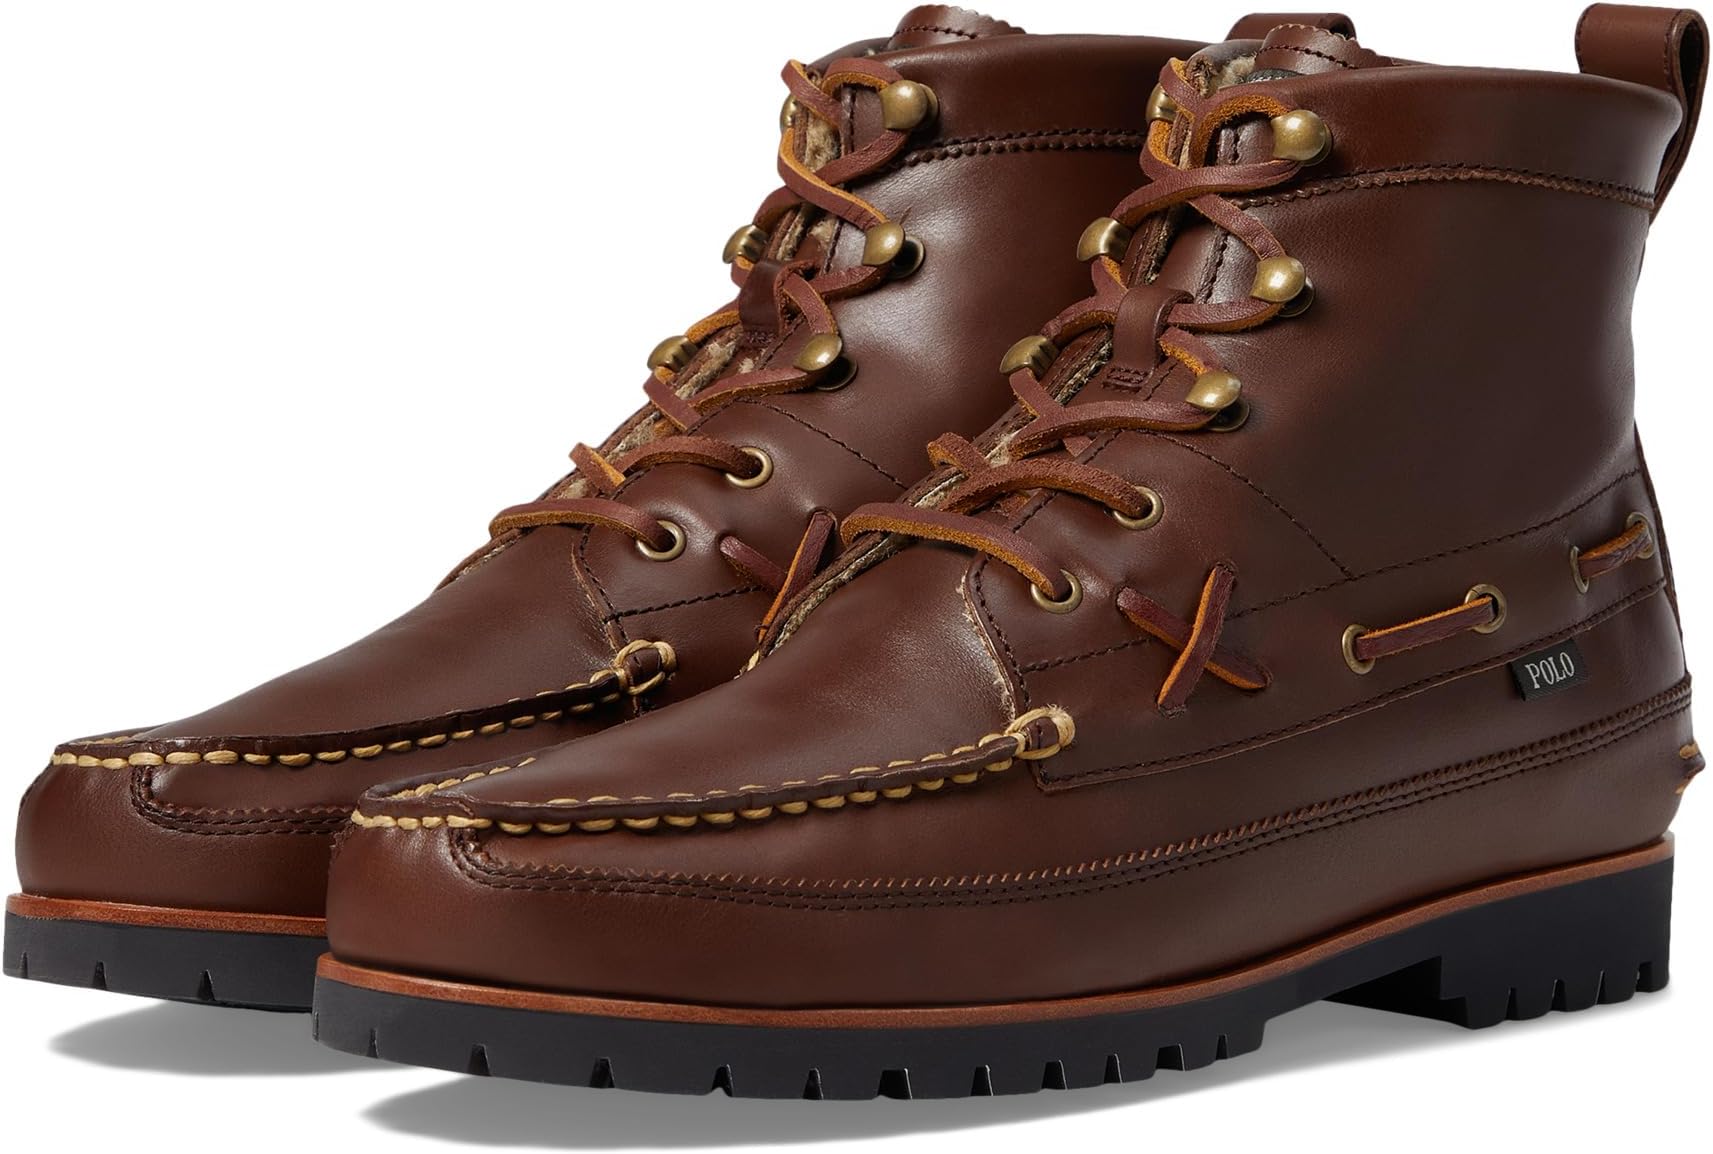 Ботинки на шнуровке Ranger Mid Boot Polo Ralph Lauren, коричневый ботинки polo ralph lauren talan mid boots mid cut коричневый